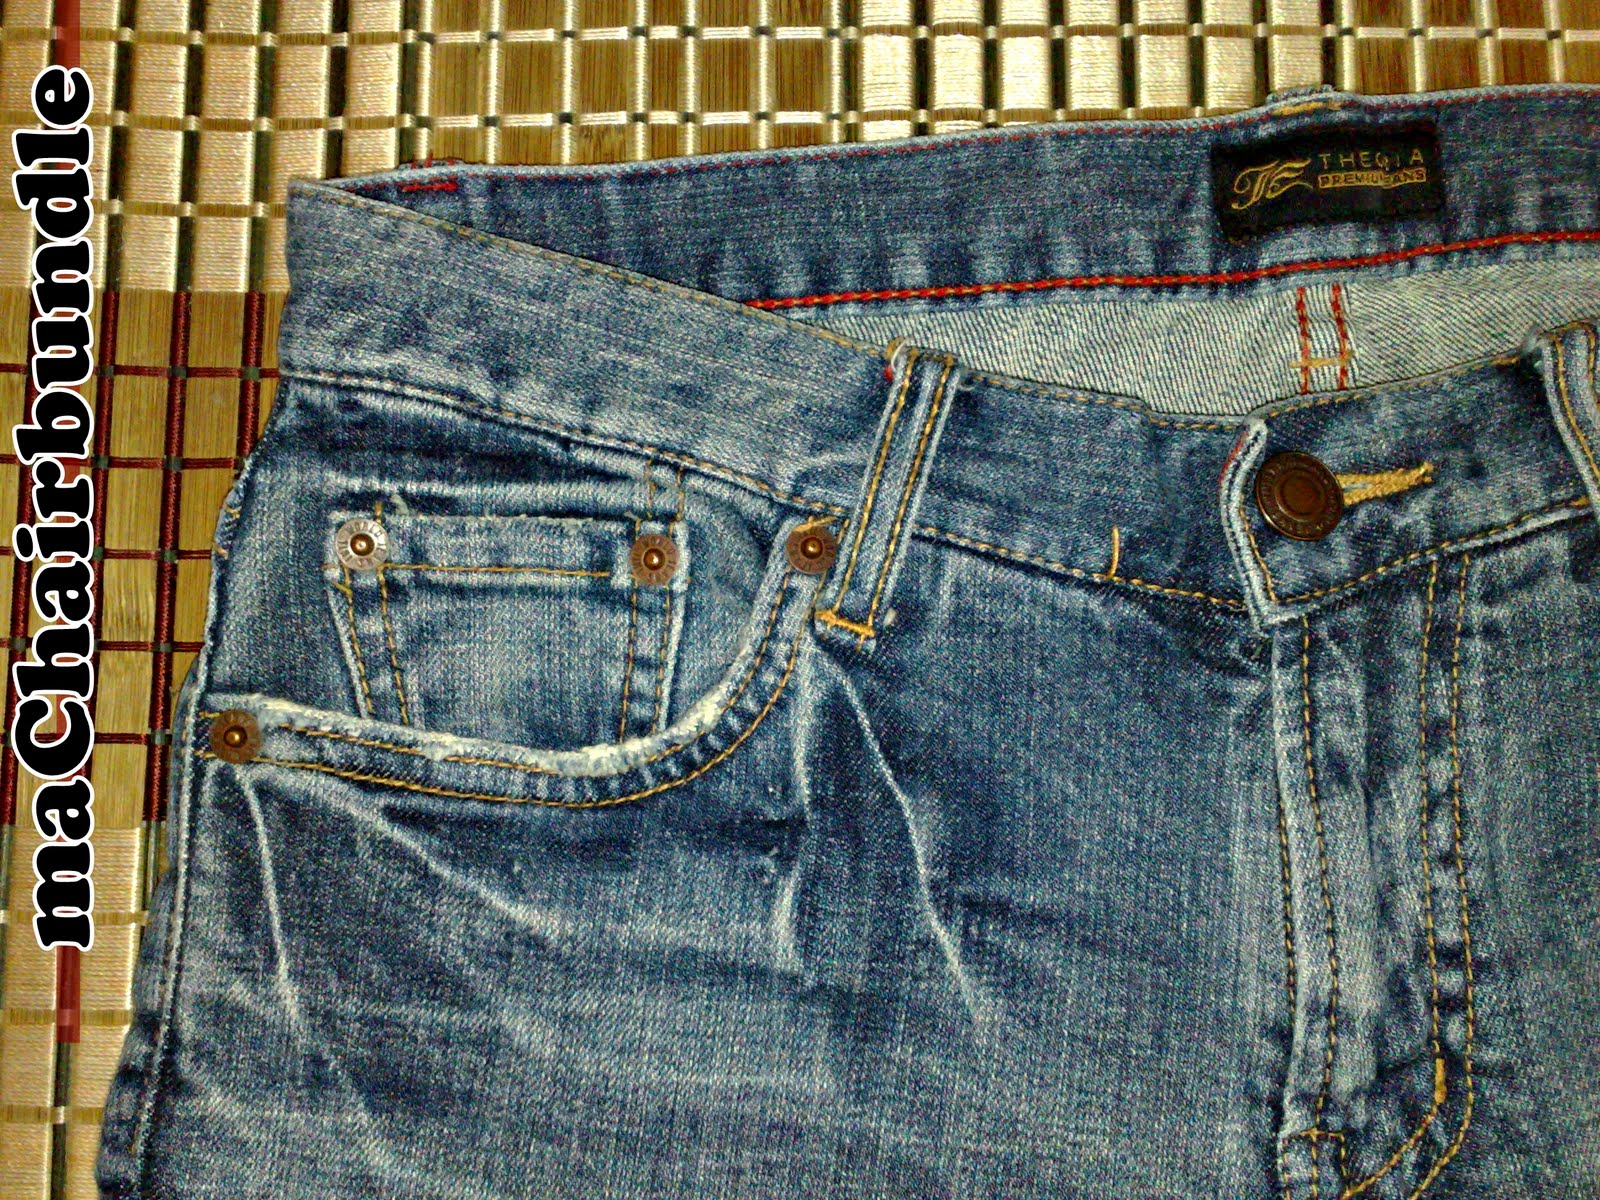 maChairbundle: Theoria Premium Jeans - RM35 (JE023)